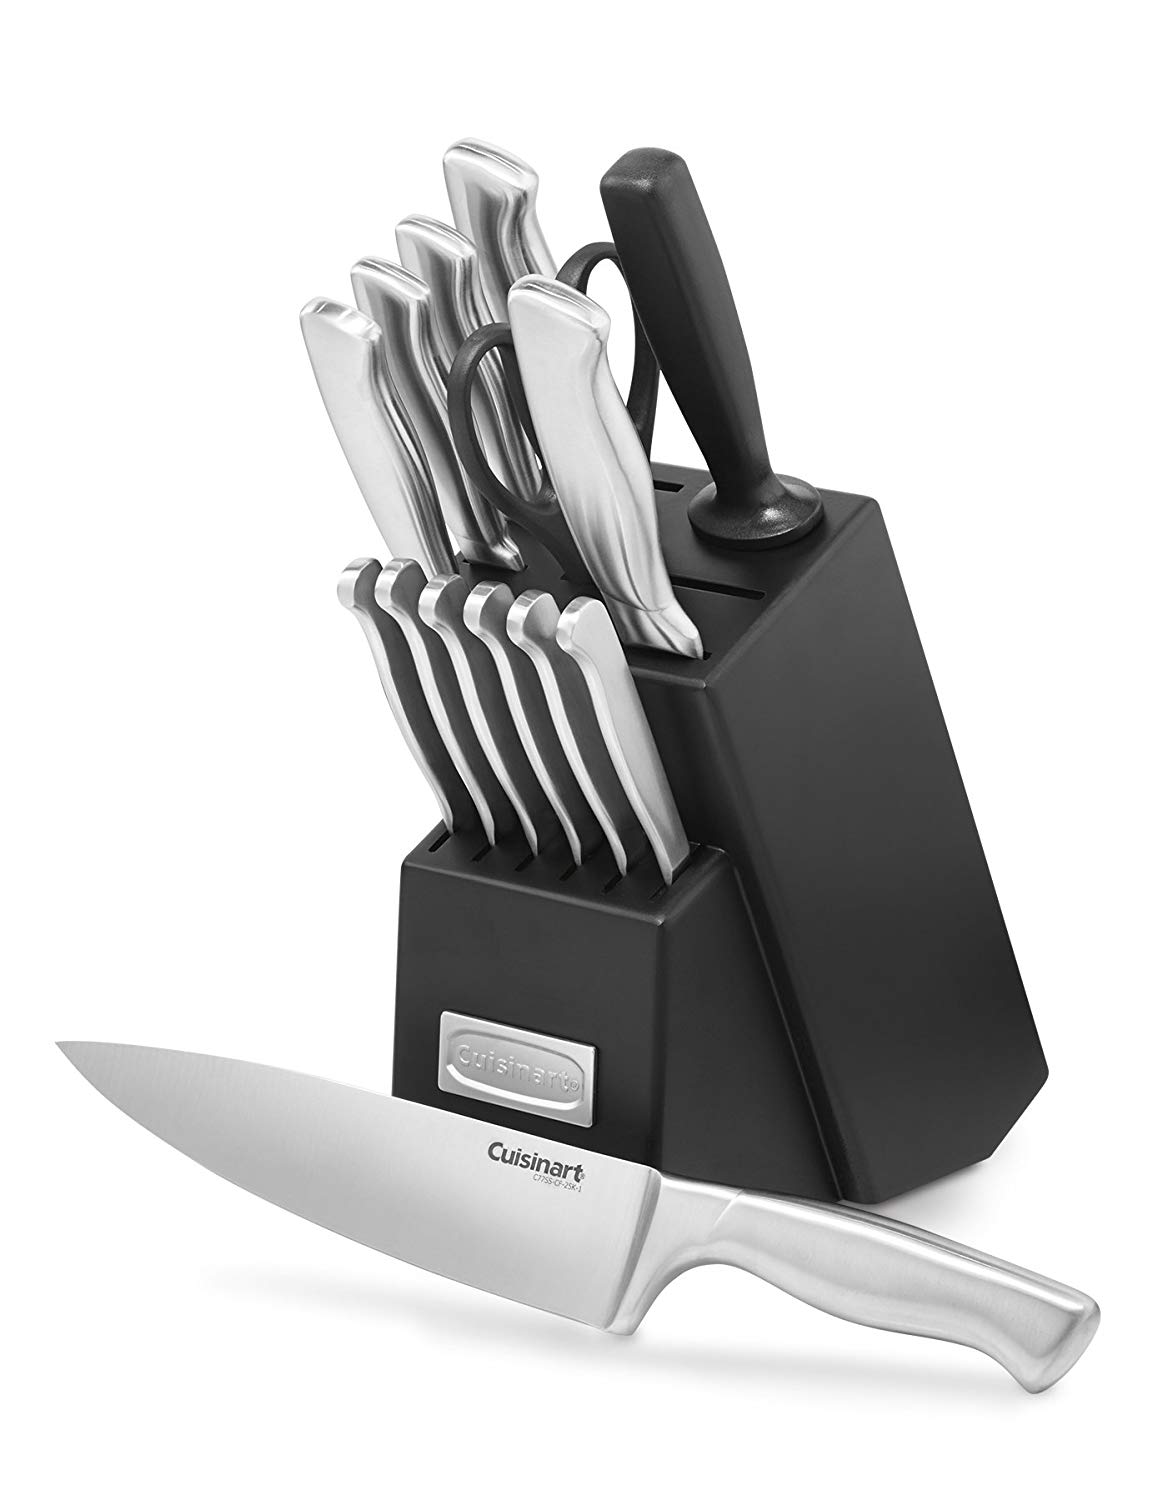 Cuisinart C77SS Ergonomic High Carbon Knife Set, 15-Piece